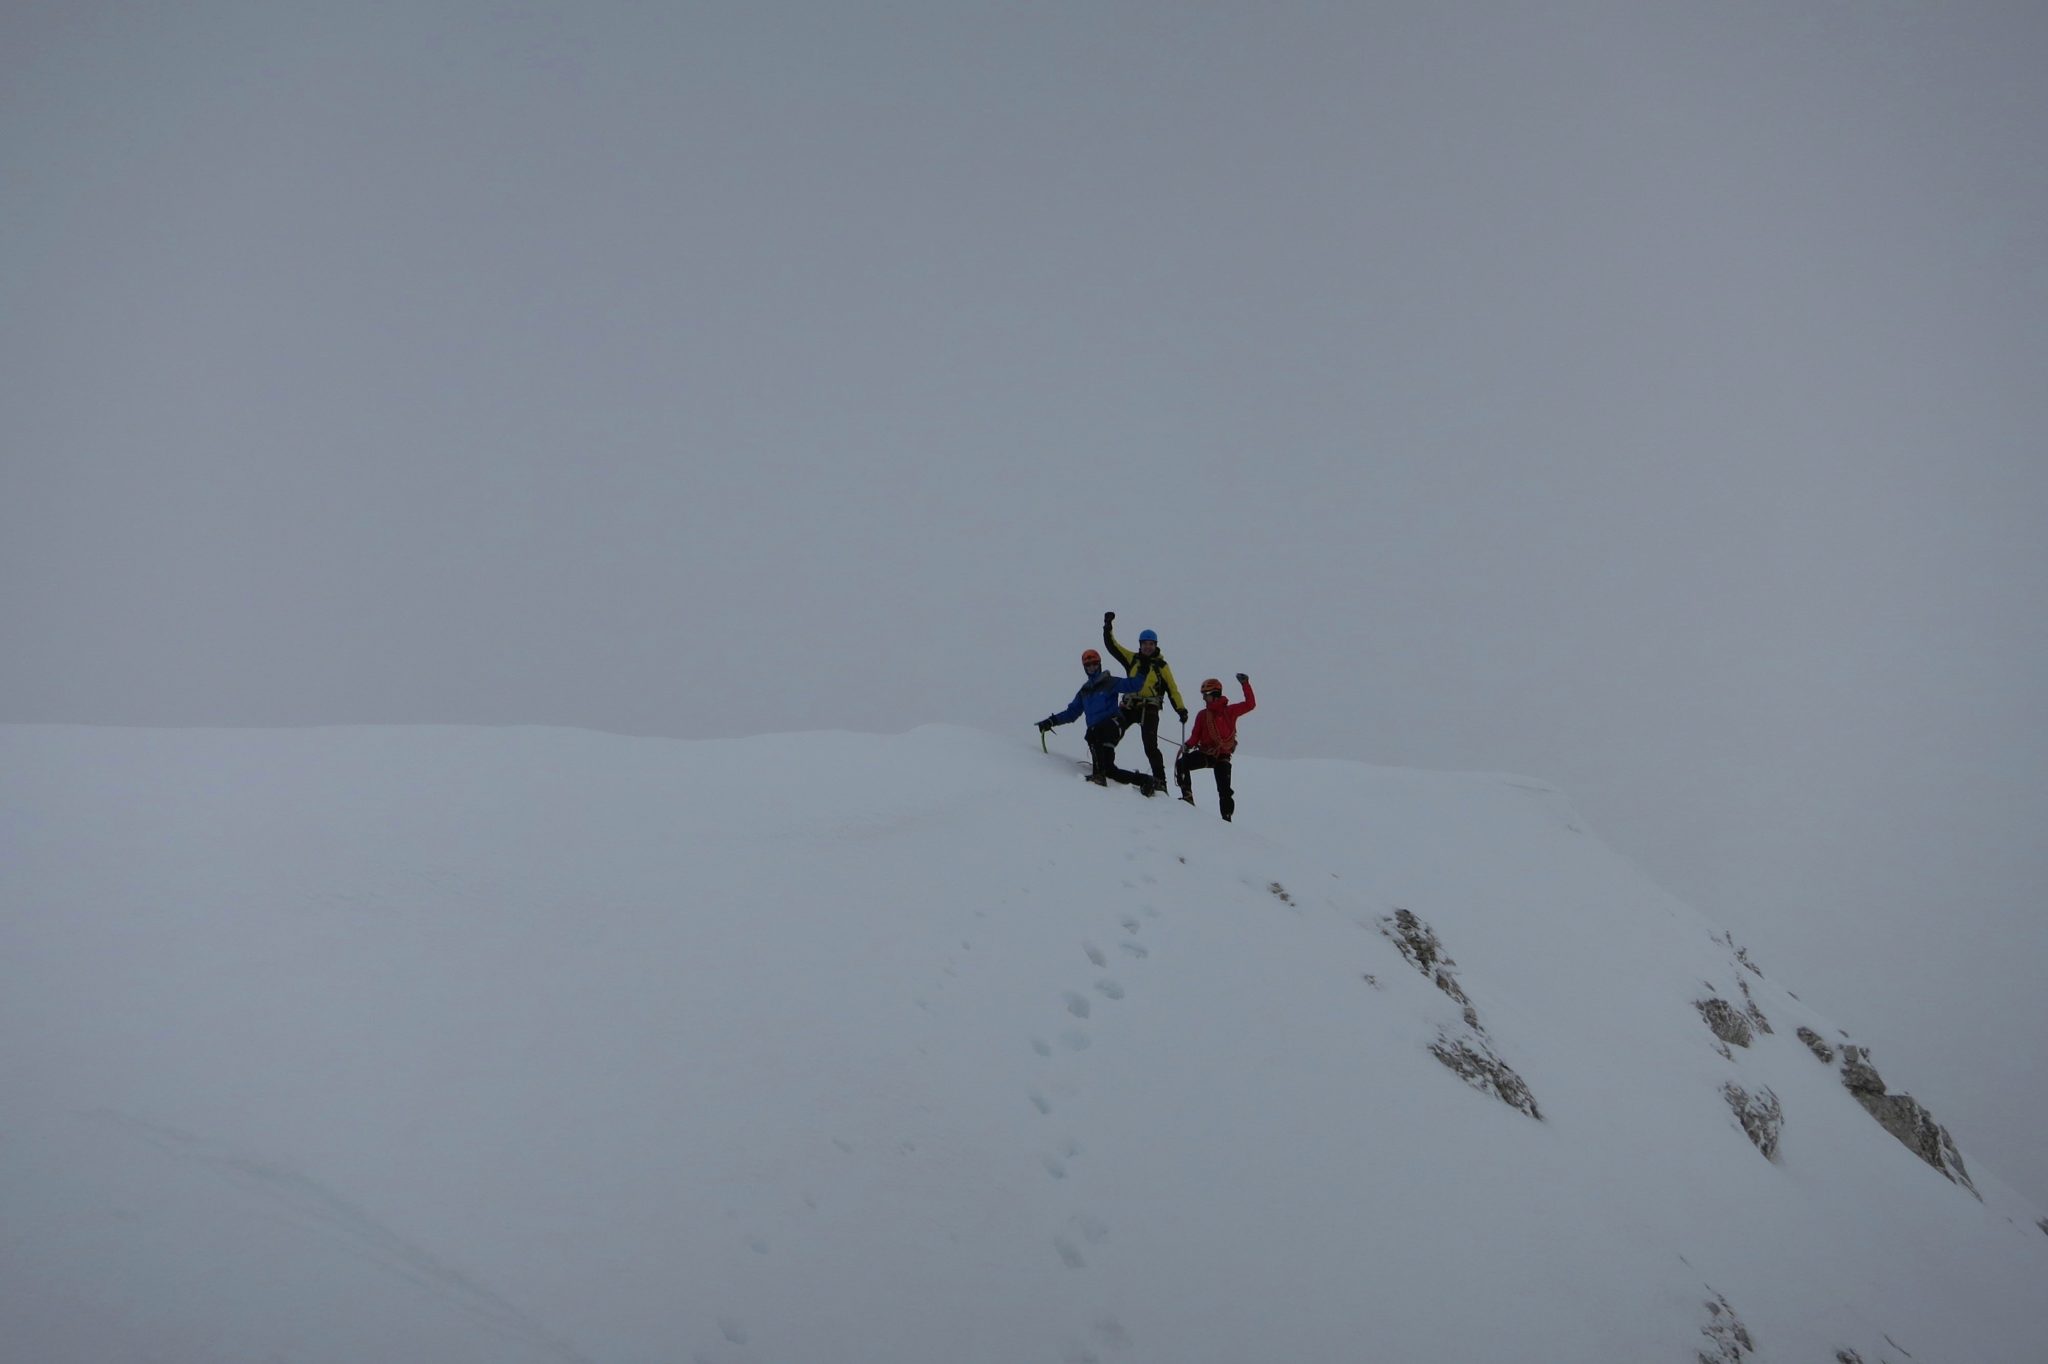 Mali Triglav, 2,725 m (8,940 ft).